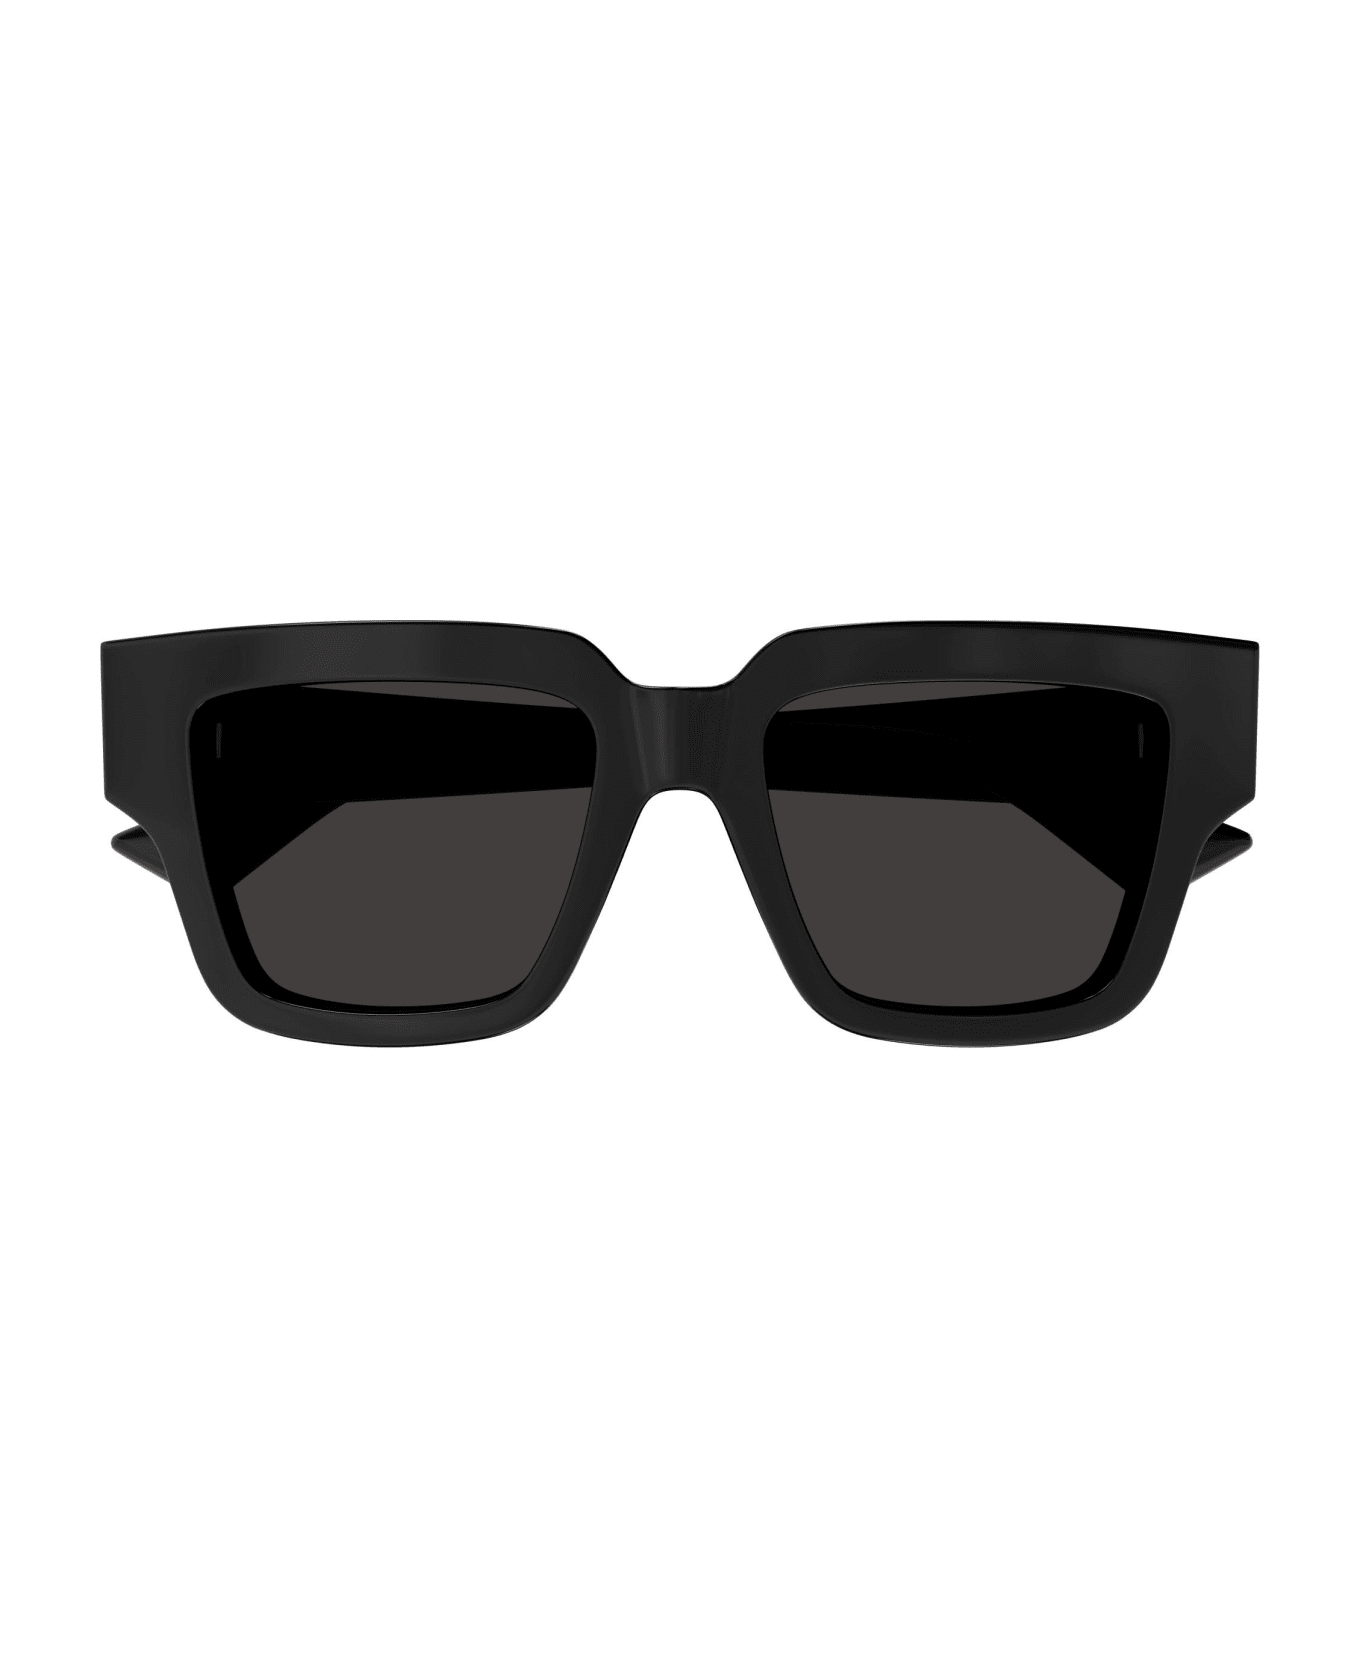 Bottega Veneta Eyewear Sunglasses - Nero/Grigio サングラス